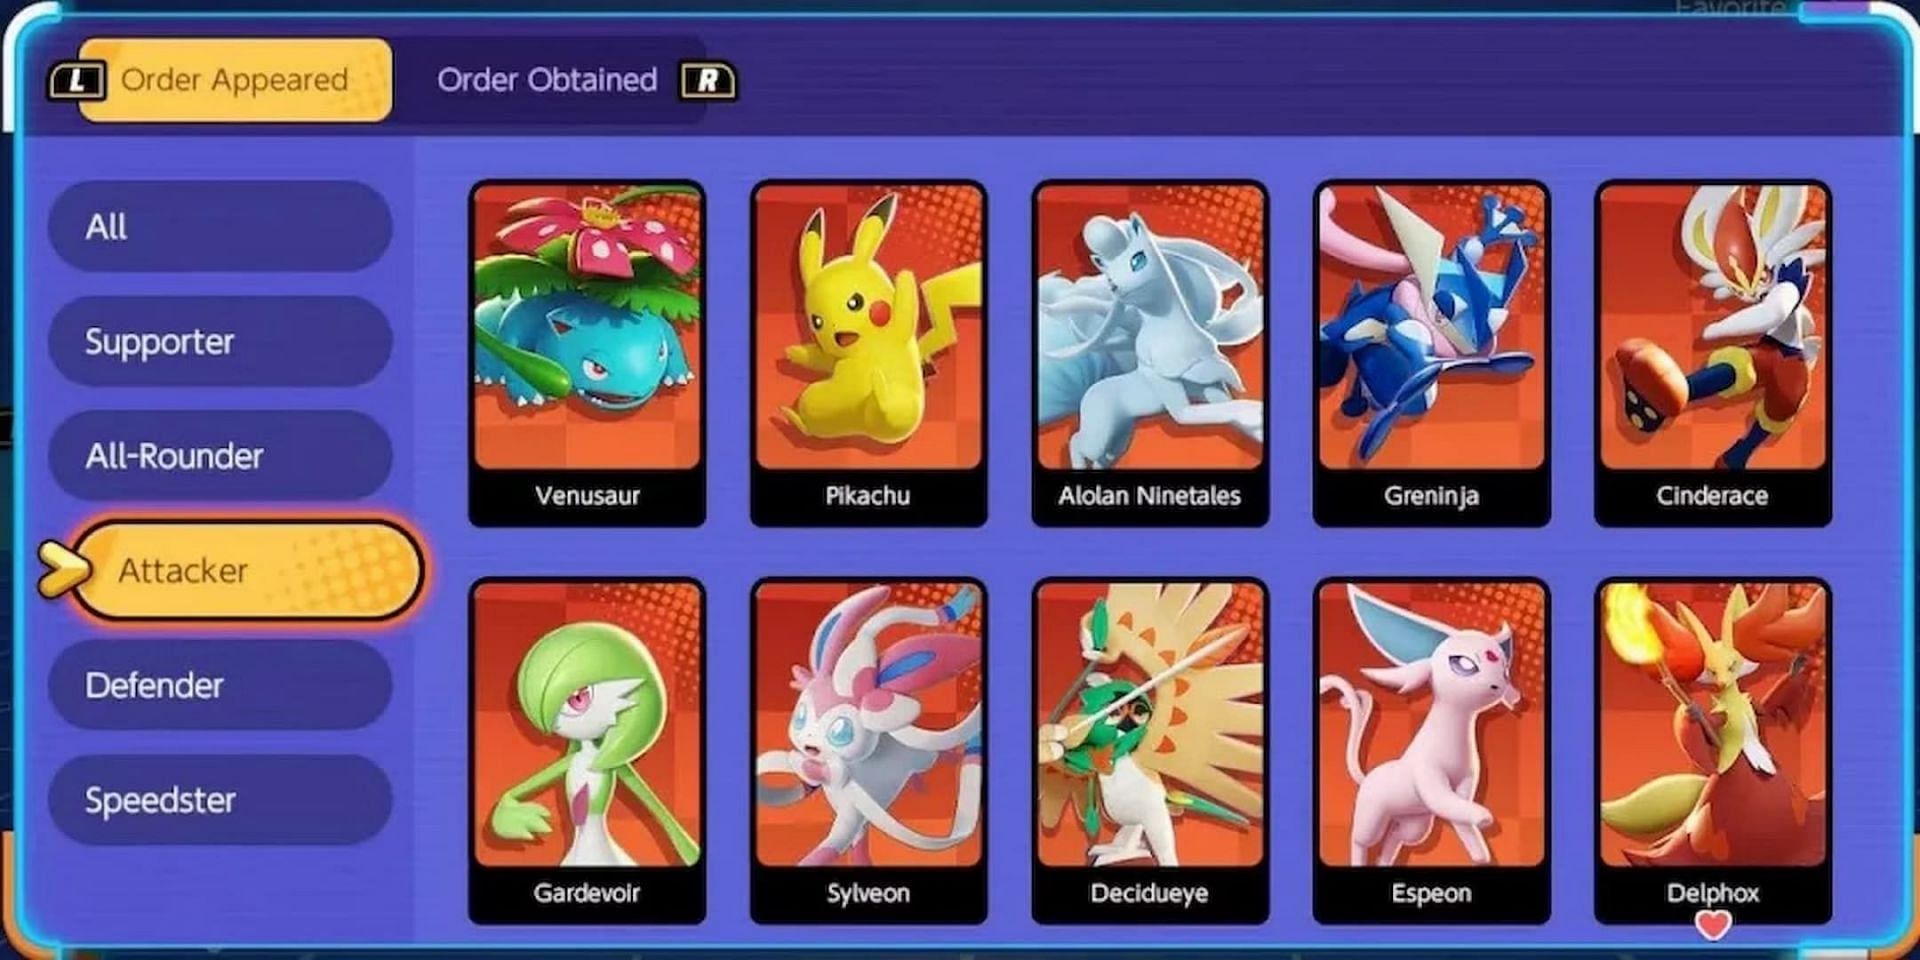 All Rounders in Pokemon Unite (Image via The Pokemon Company)